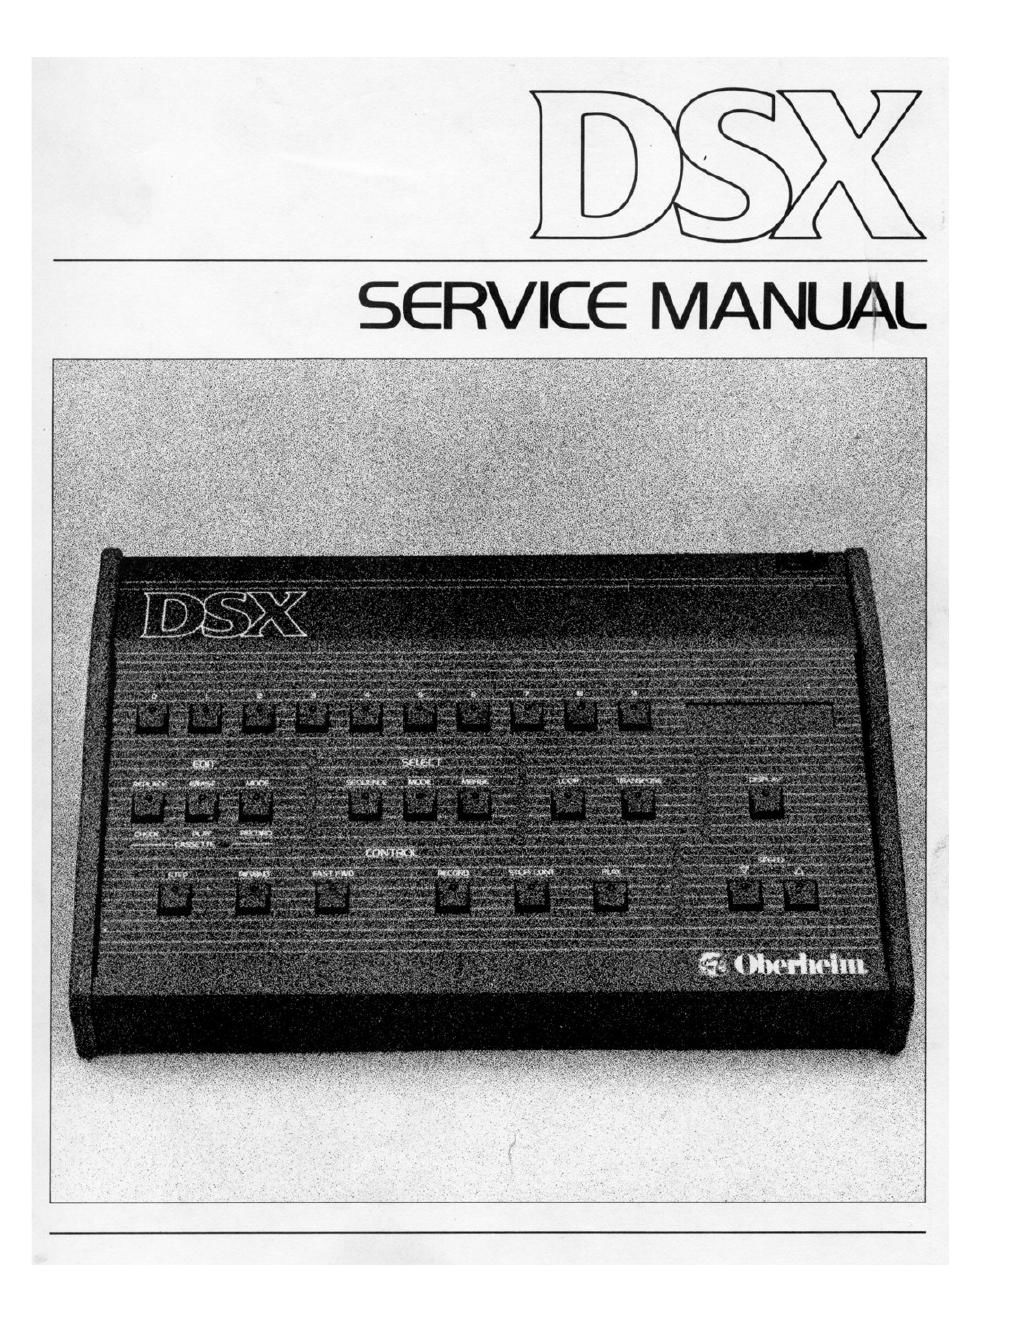 oberheim dsx service manual